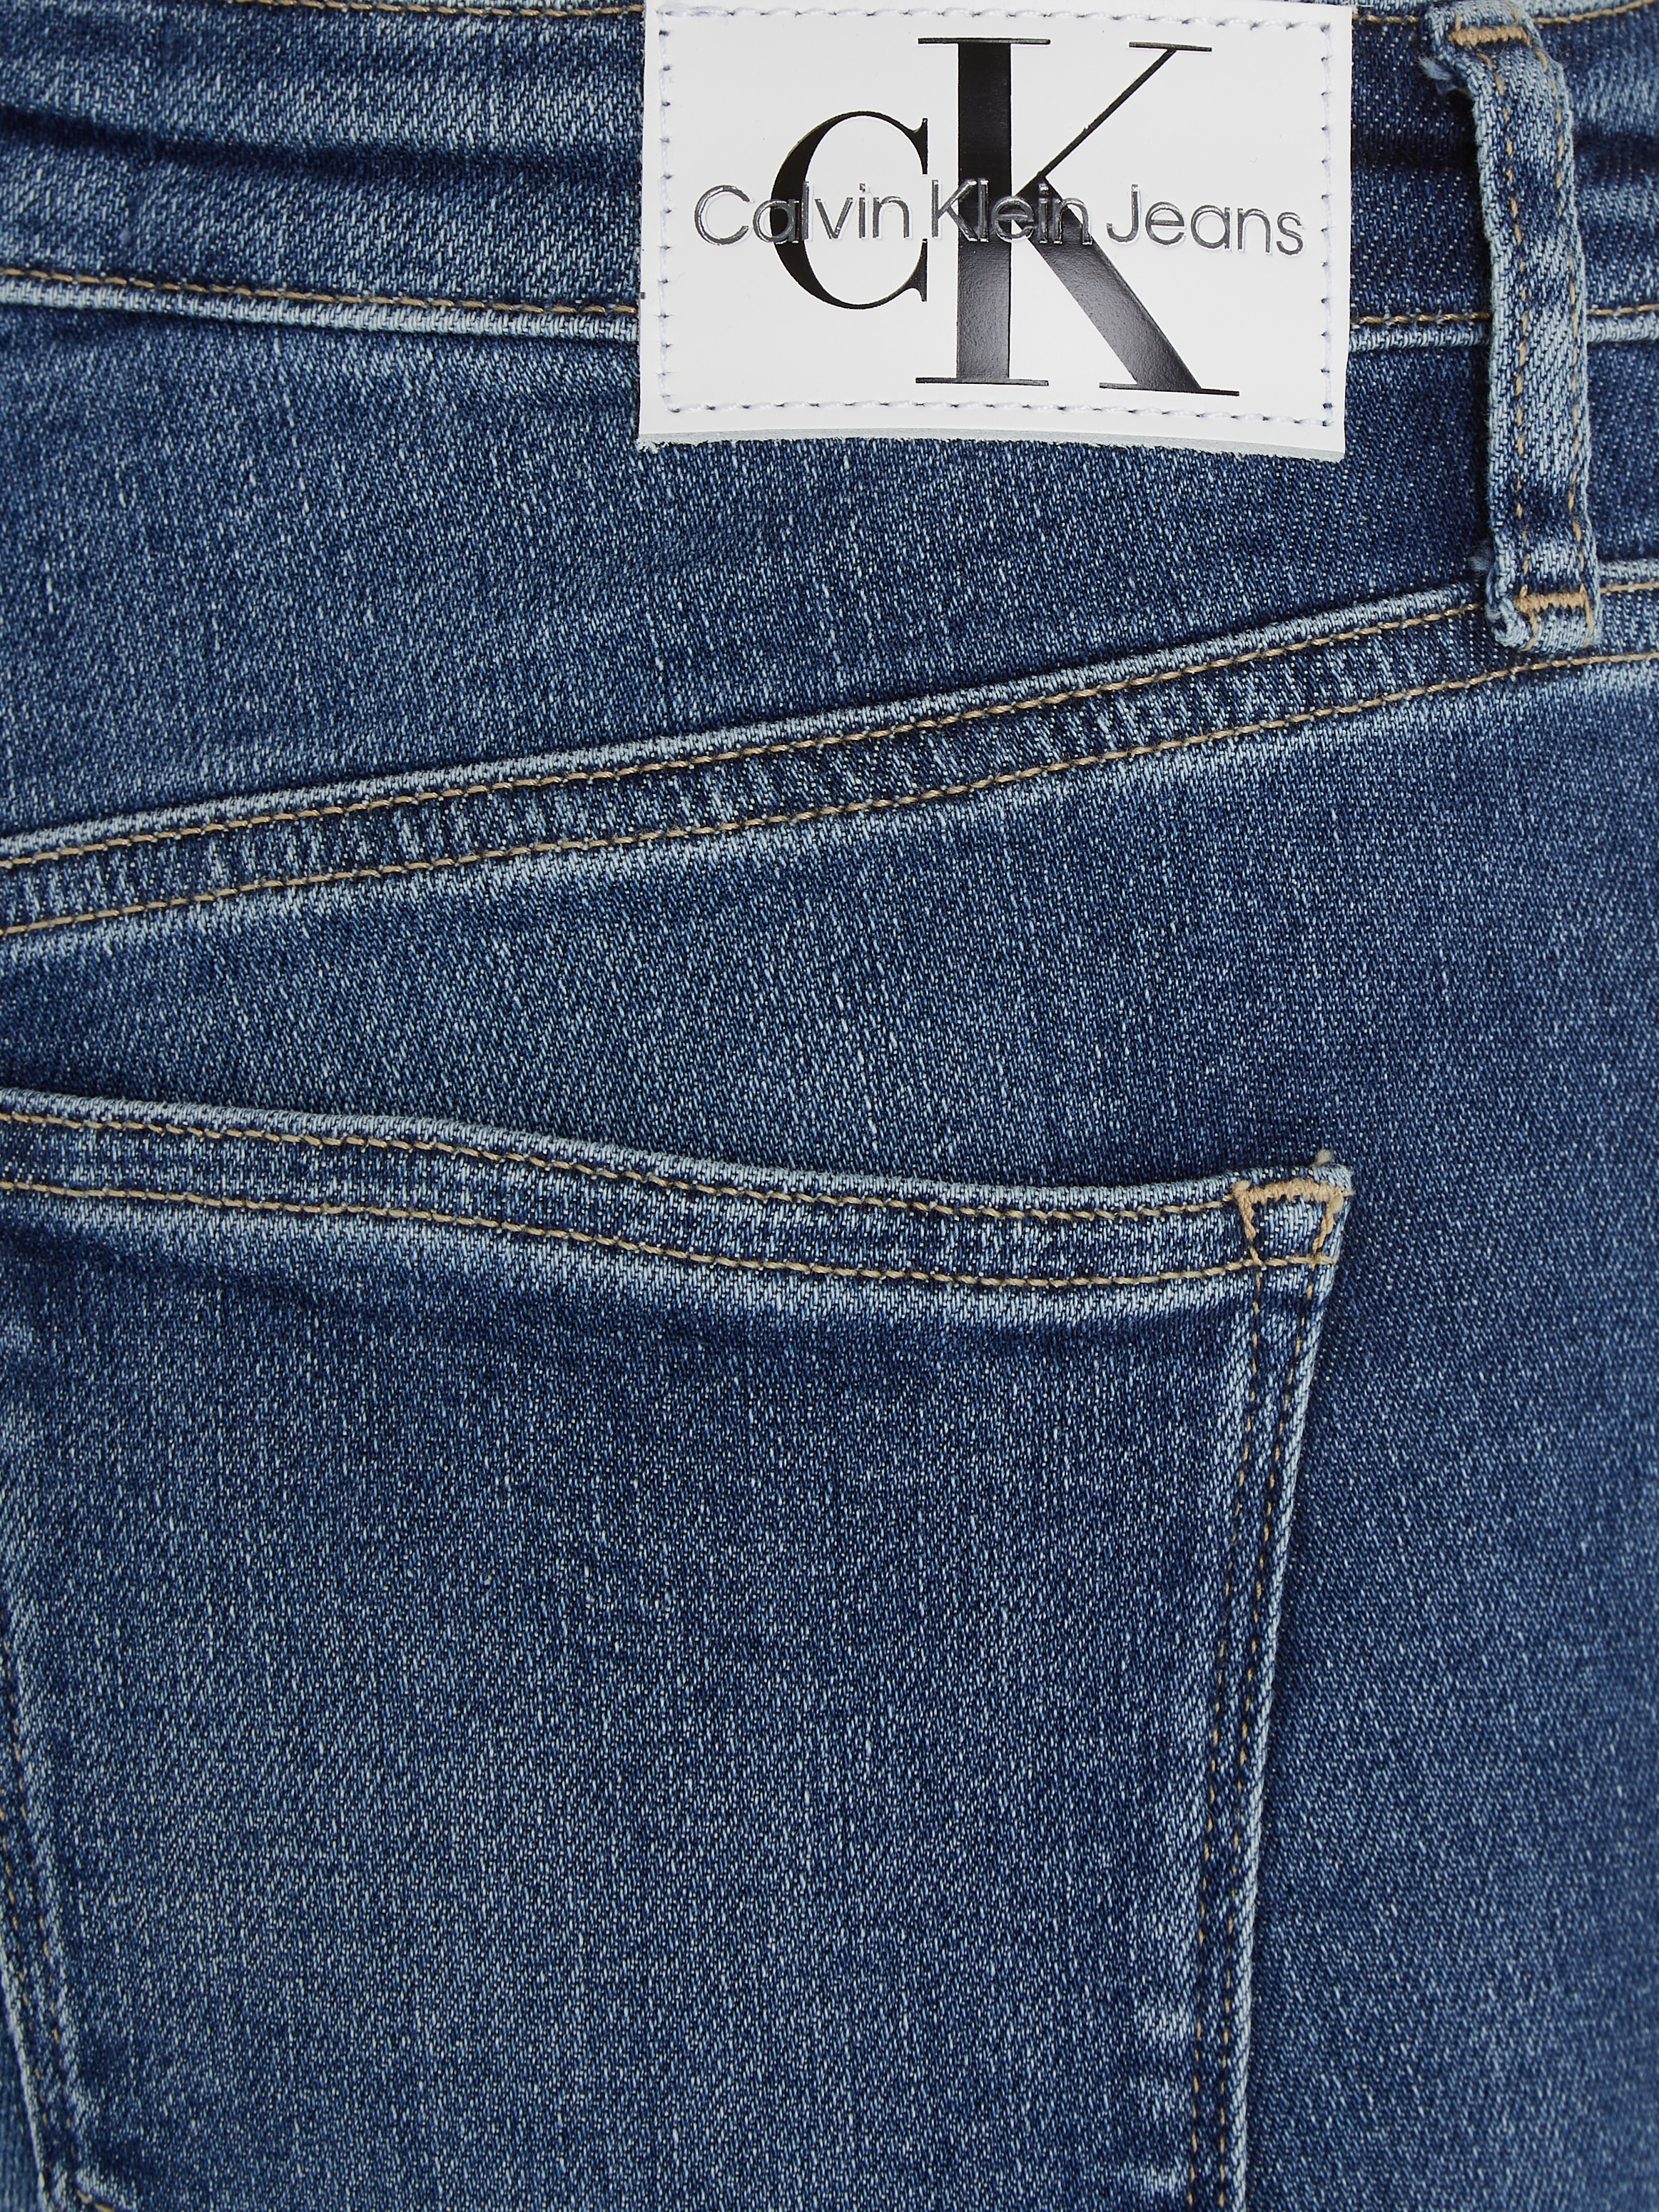 ♕ Calvin Klein bestellen Jeans SKINNY«, 5-Pocket-Style Skinny-fit-Jeans RISE versandkostenfrei »HIGH im